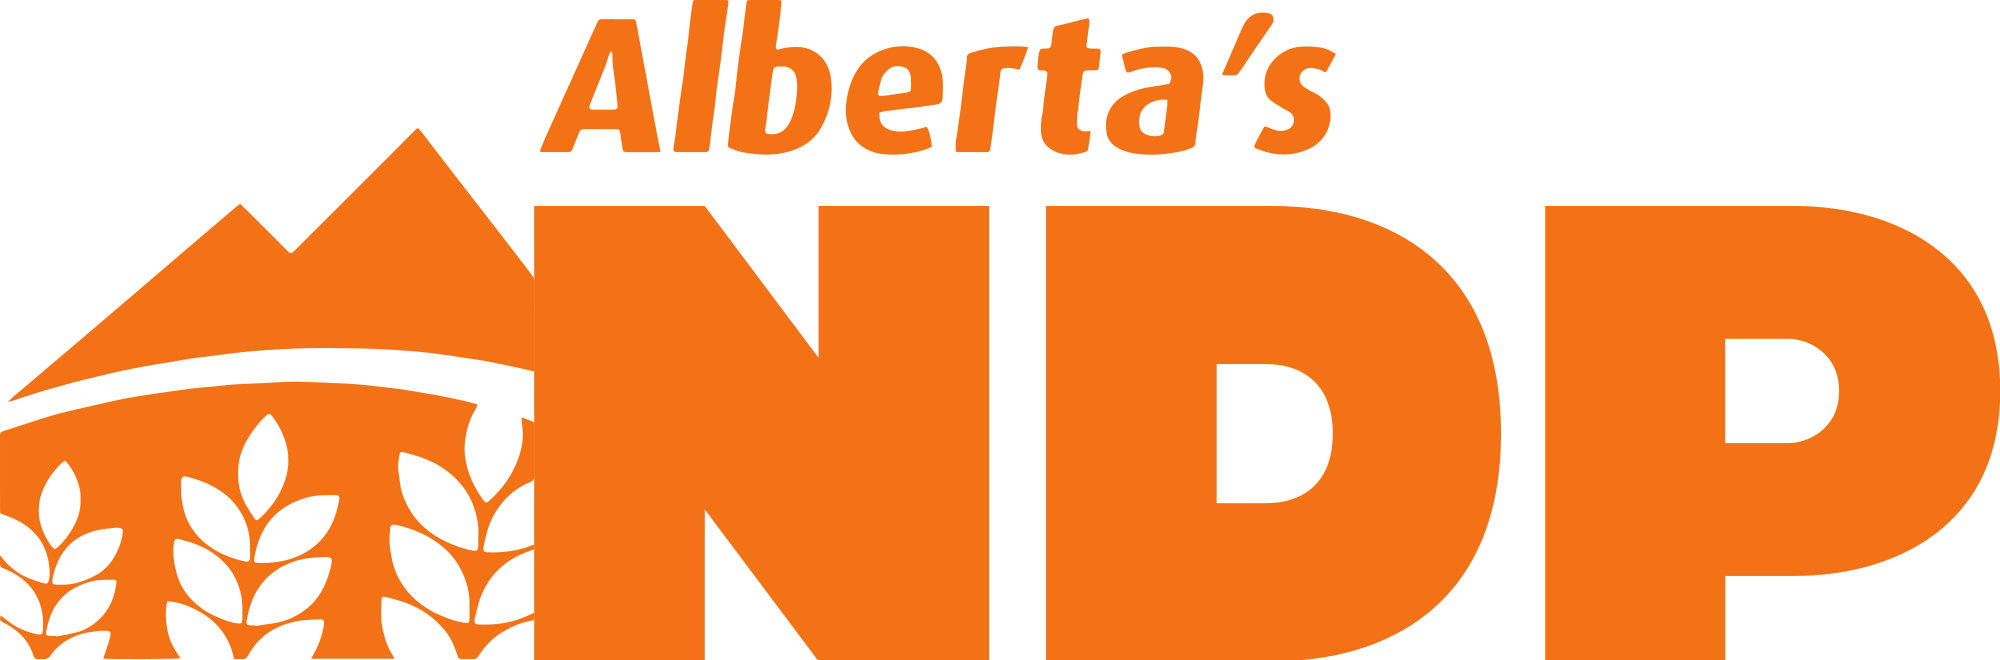 Open - Alberta New Democratic Party (2000x660)